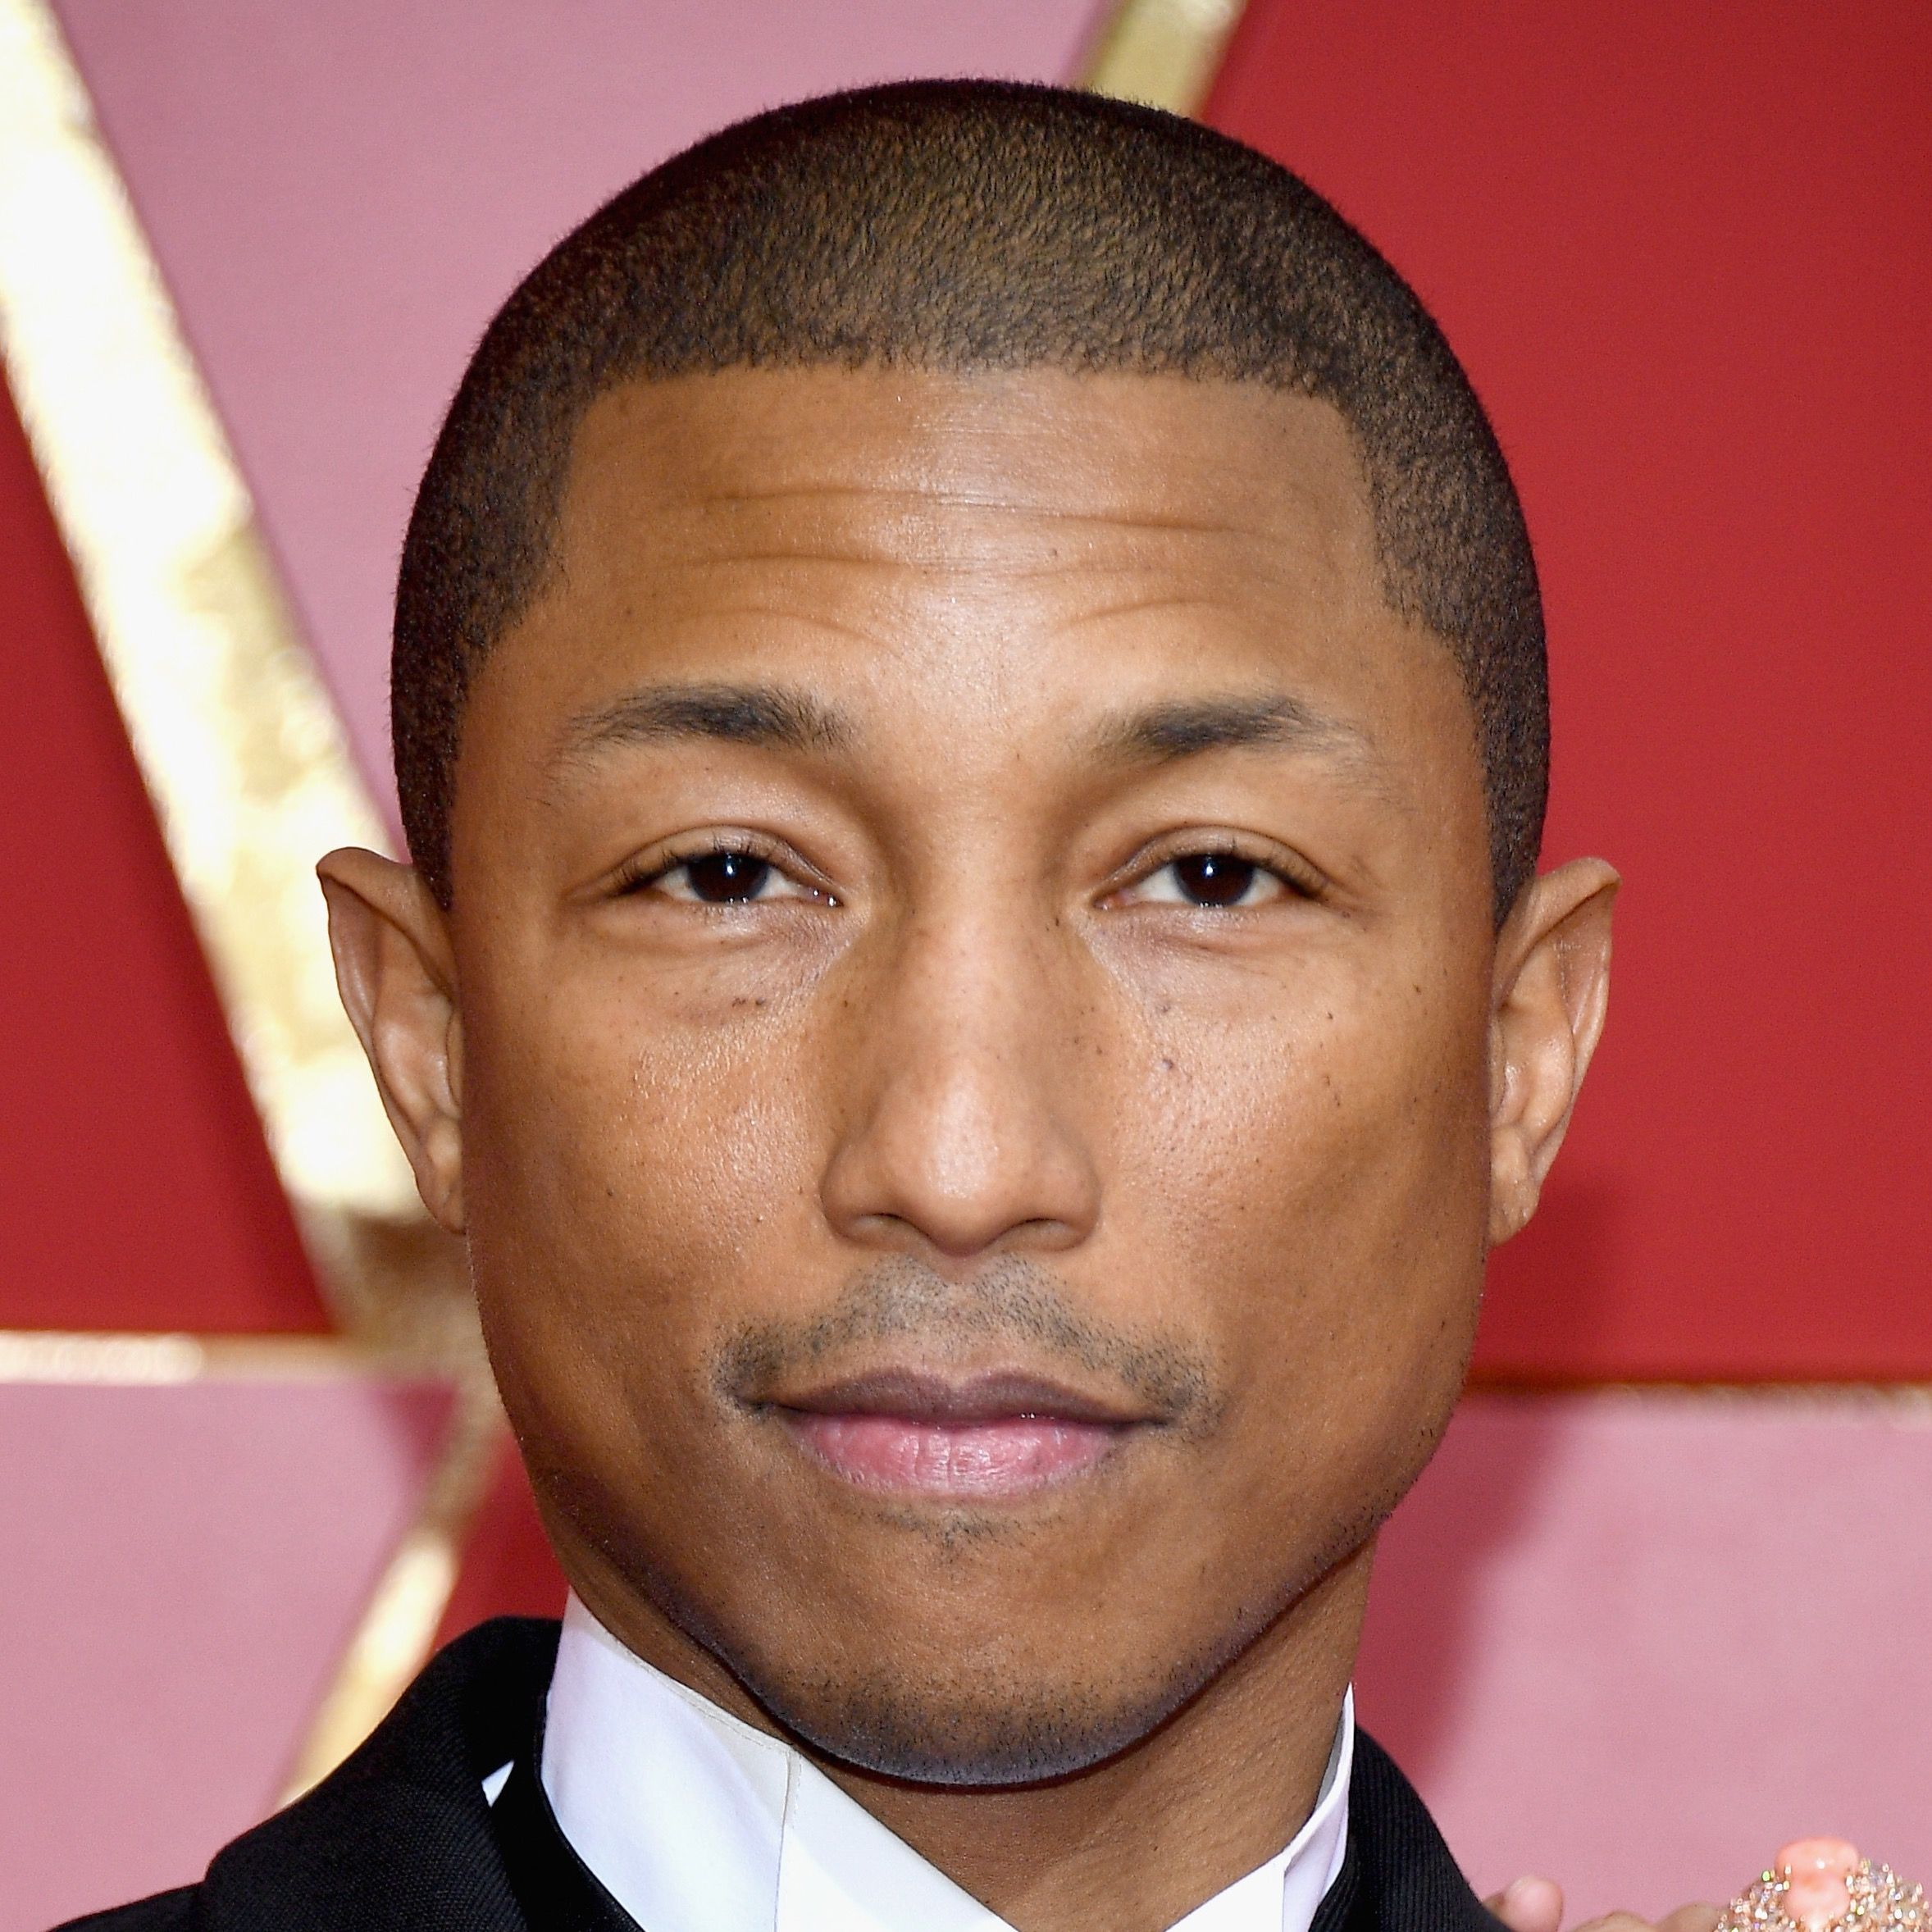 Former The Voice judge and Grammy-winning artist Pharrell Williams